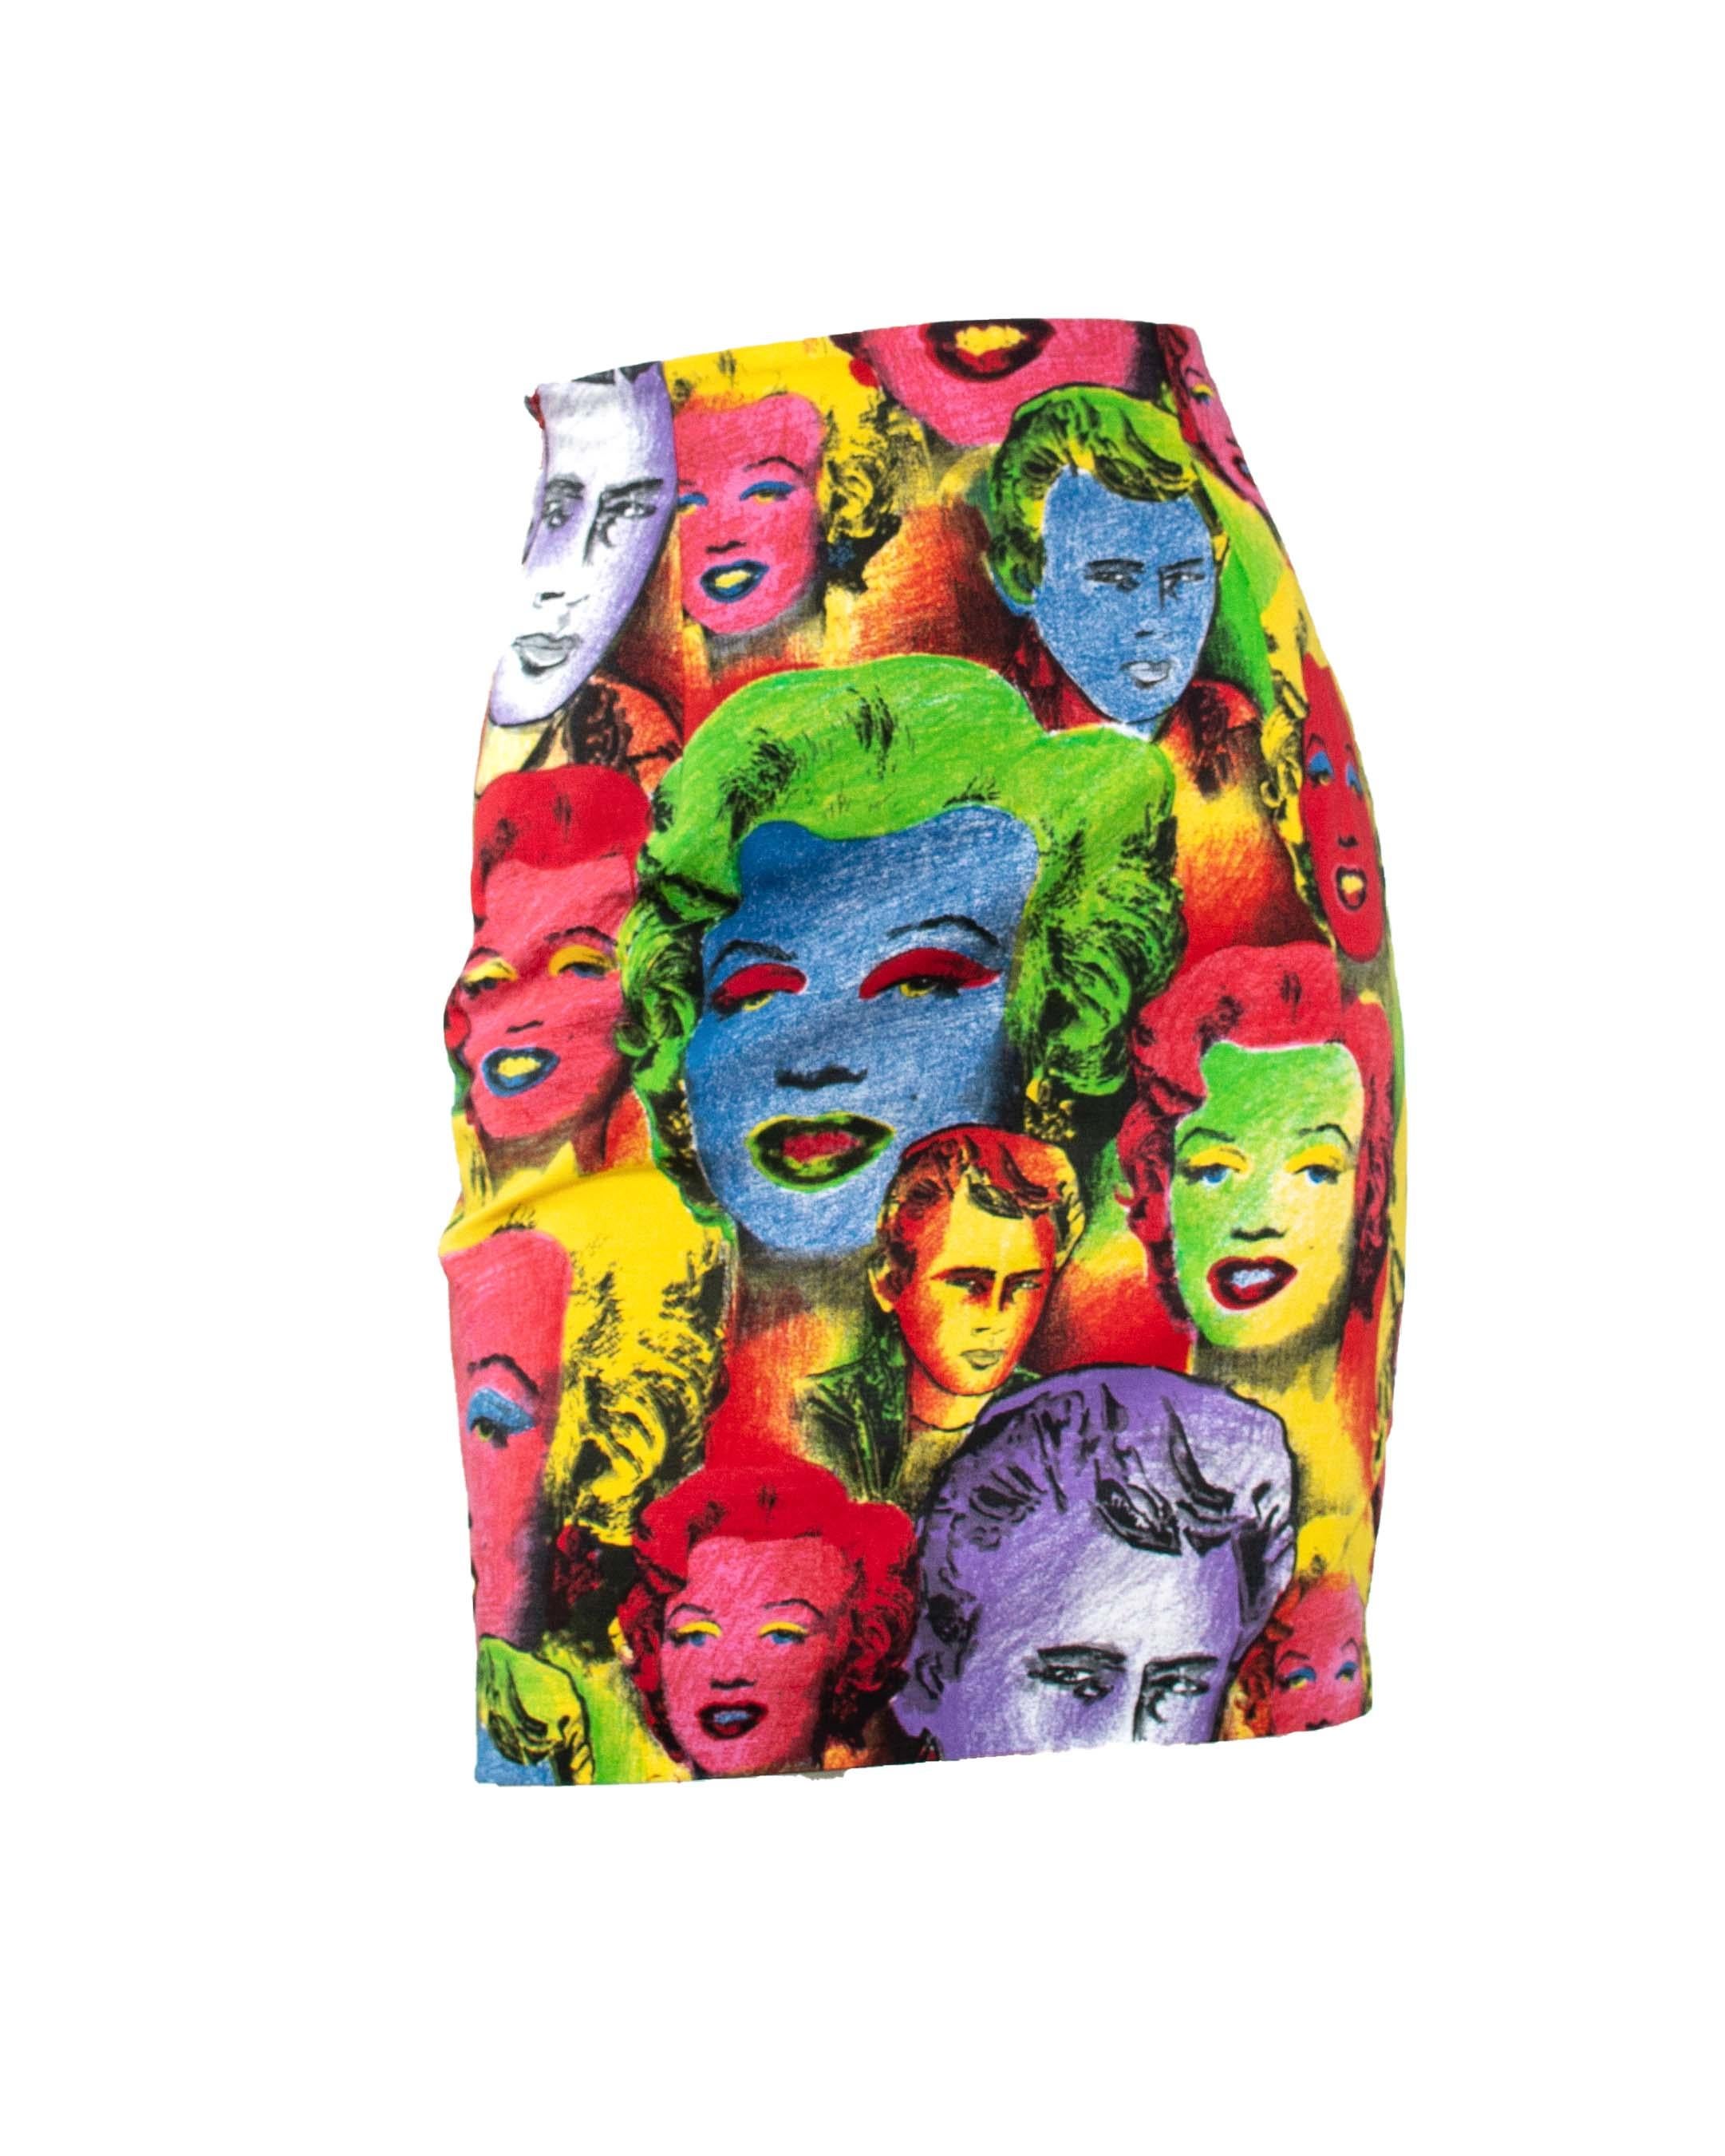 S/S 1991 Gianni Versace Marilyn Monroe Warhol Inspired Print Pop Art Skirt Suit For Sale 1